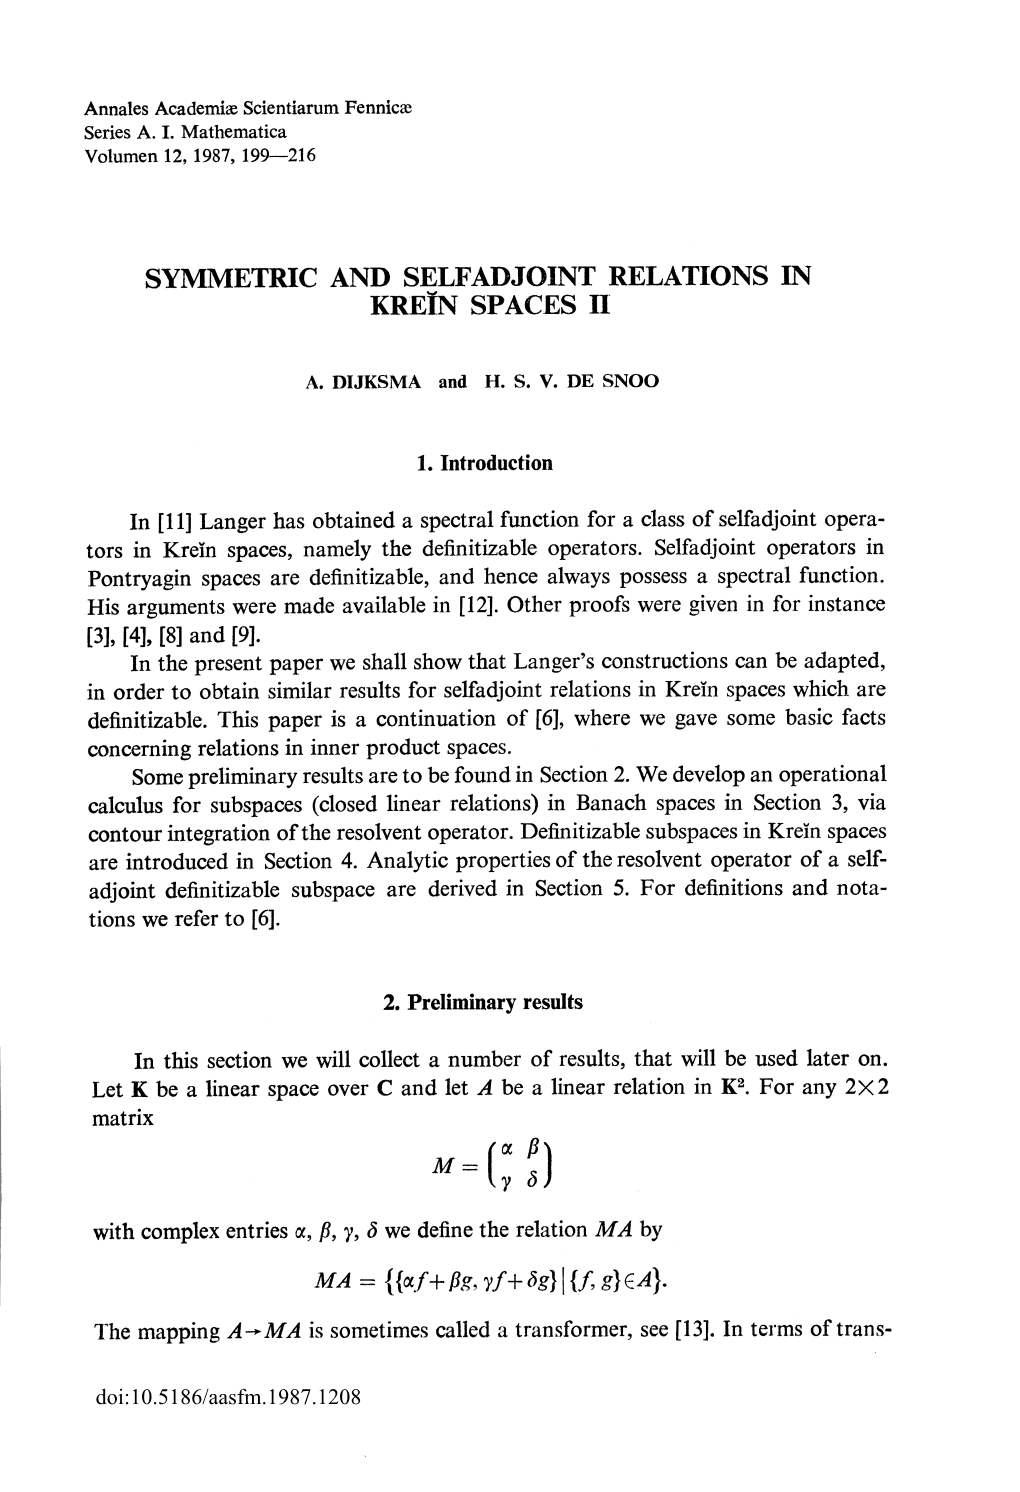 Symmetric and Setfadjoint Relations in Kreini Spaces Ii